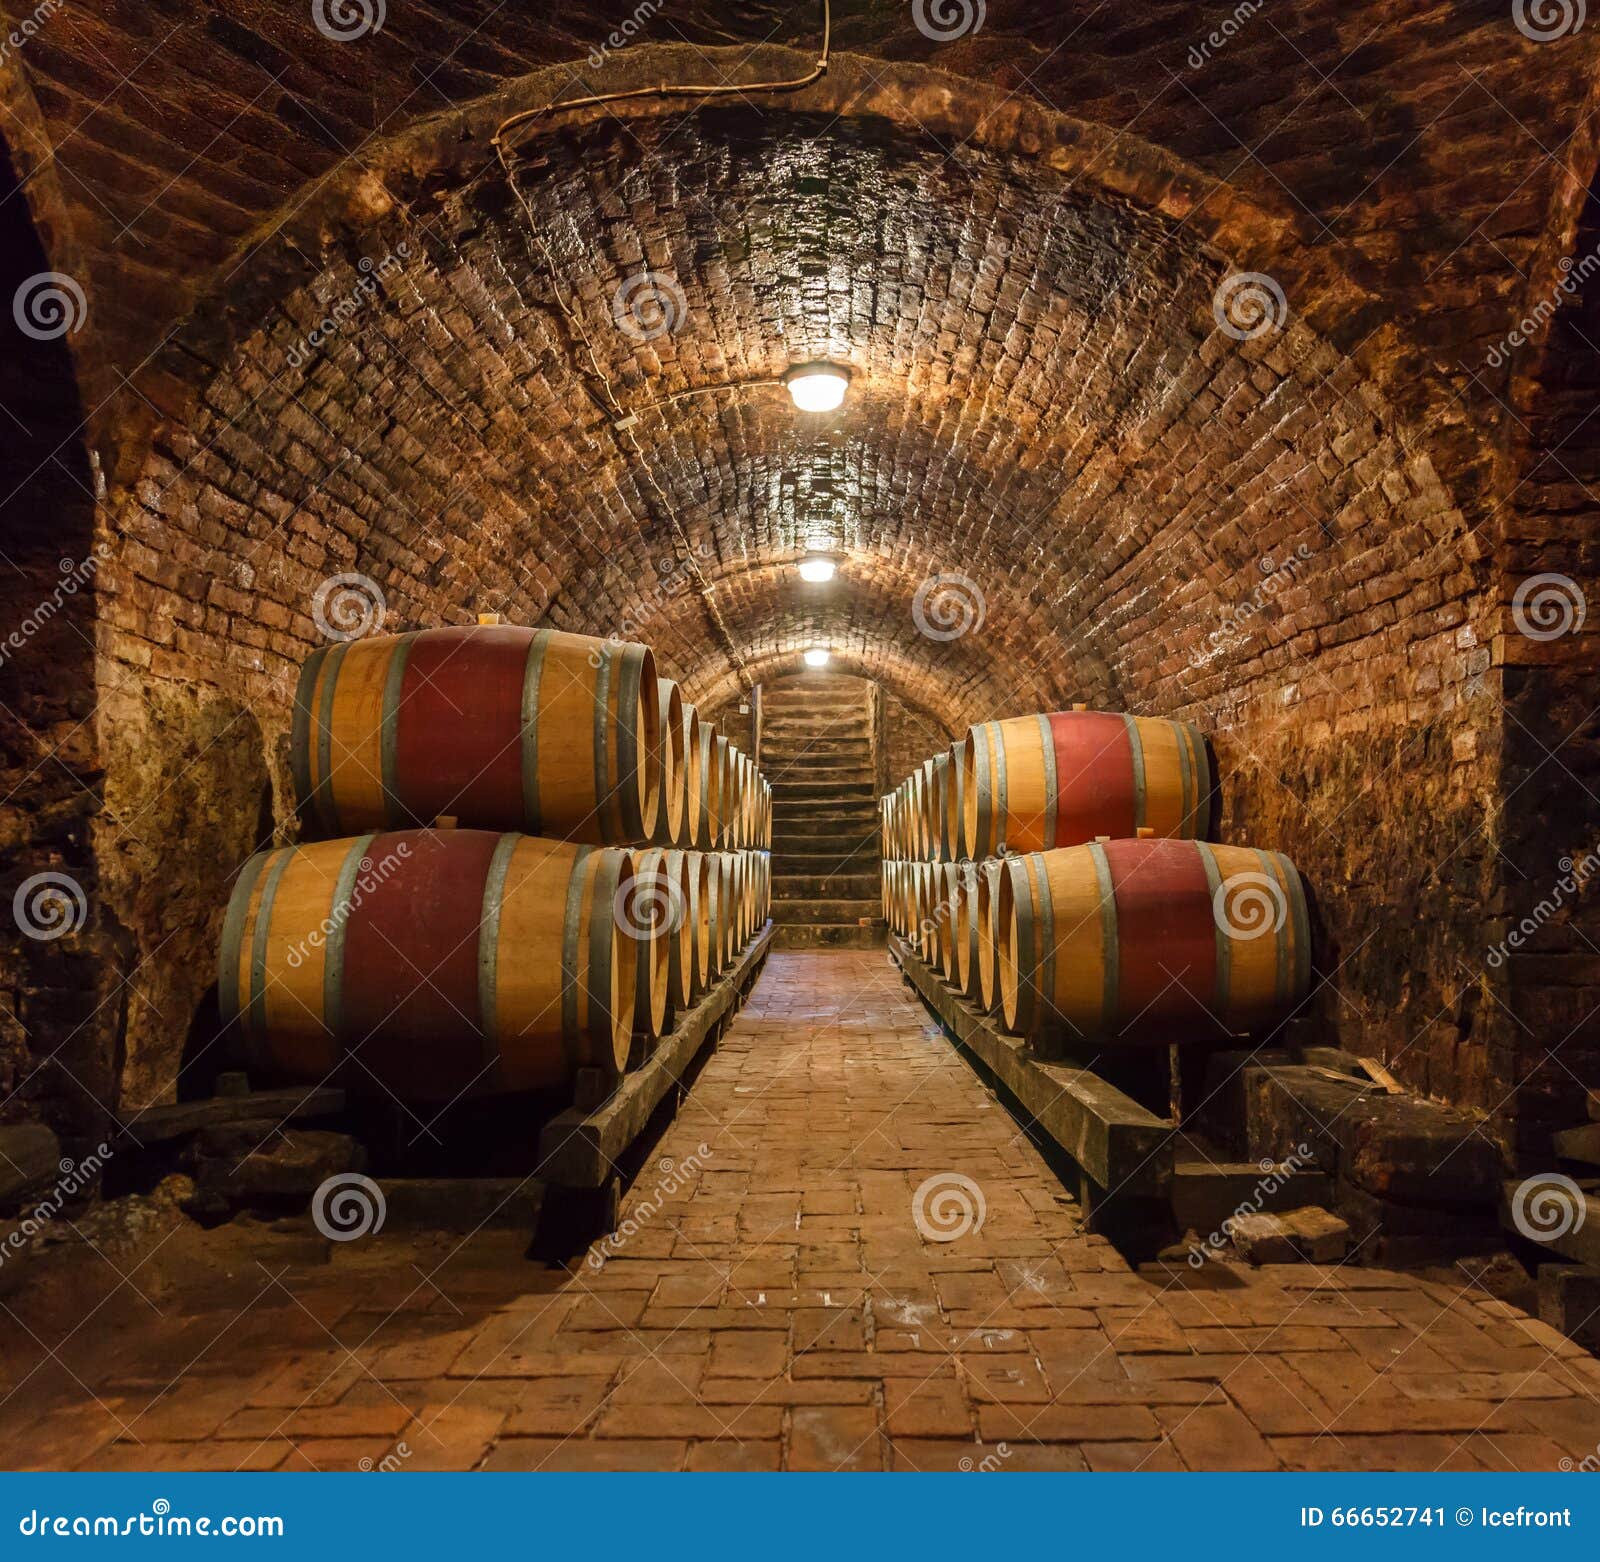 oak barrels in a underground wine cellar